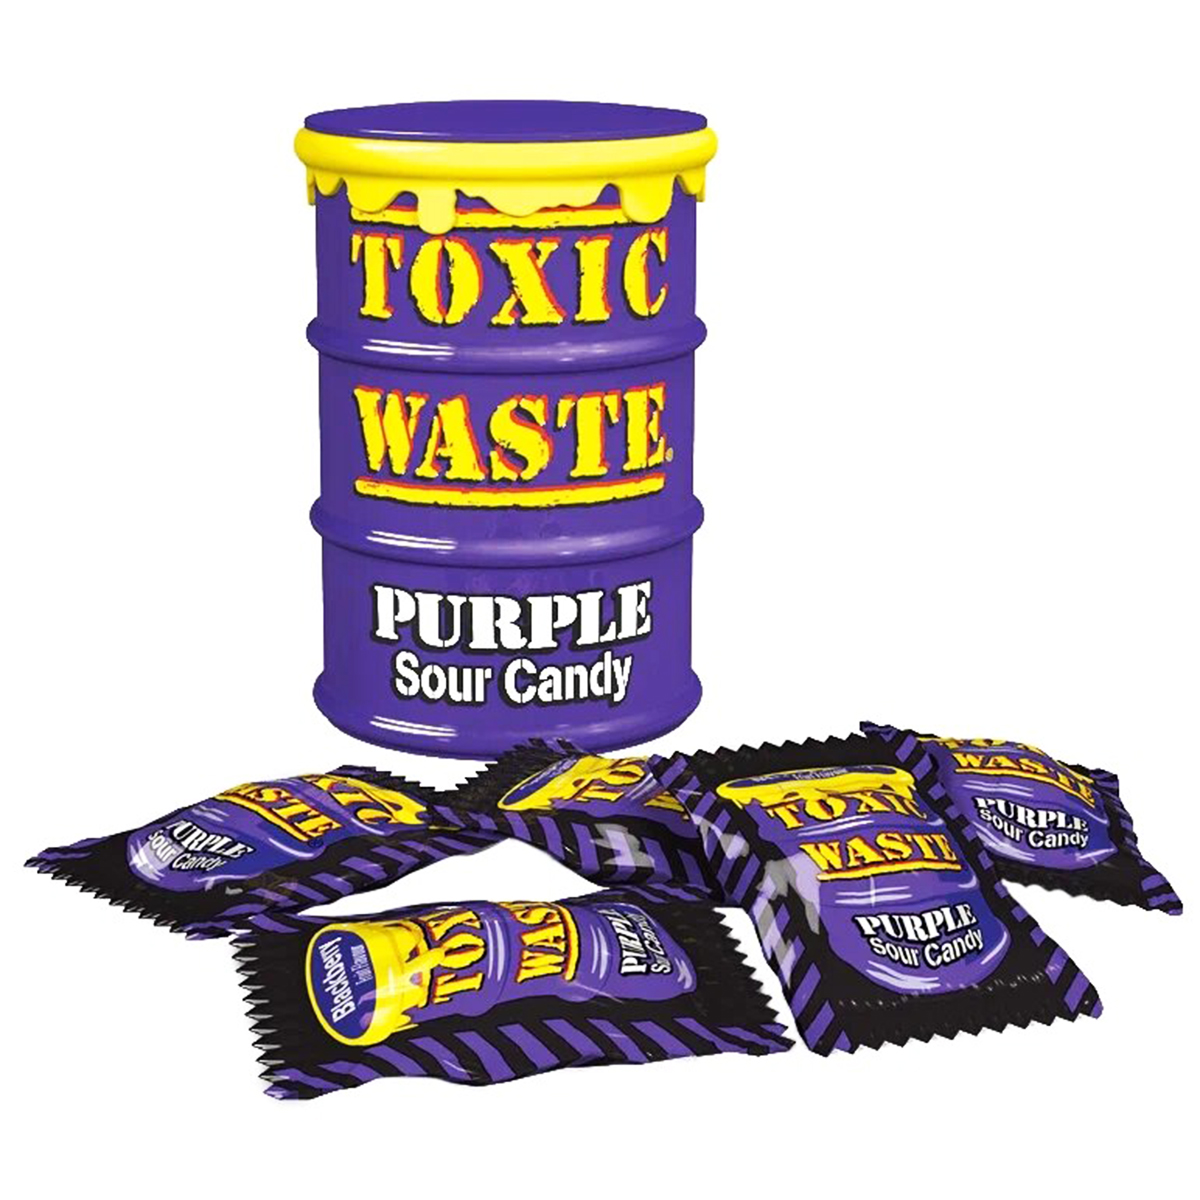 Токсик конфеты. Toxic waste конфеты. Леденцы Toxic waste Purple 42гр. Кислые леденцы Toxic waste. Конфеты токси квест.